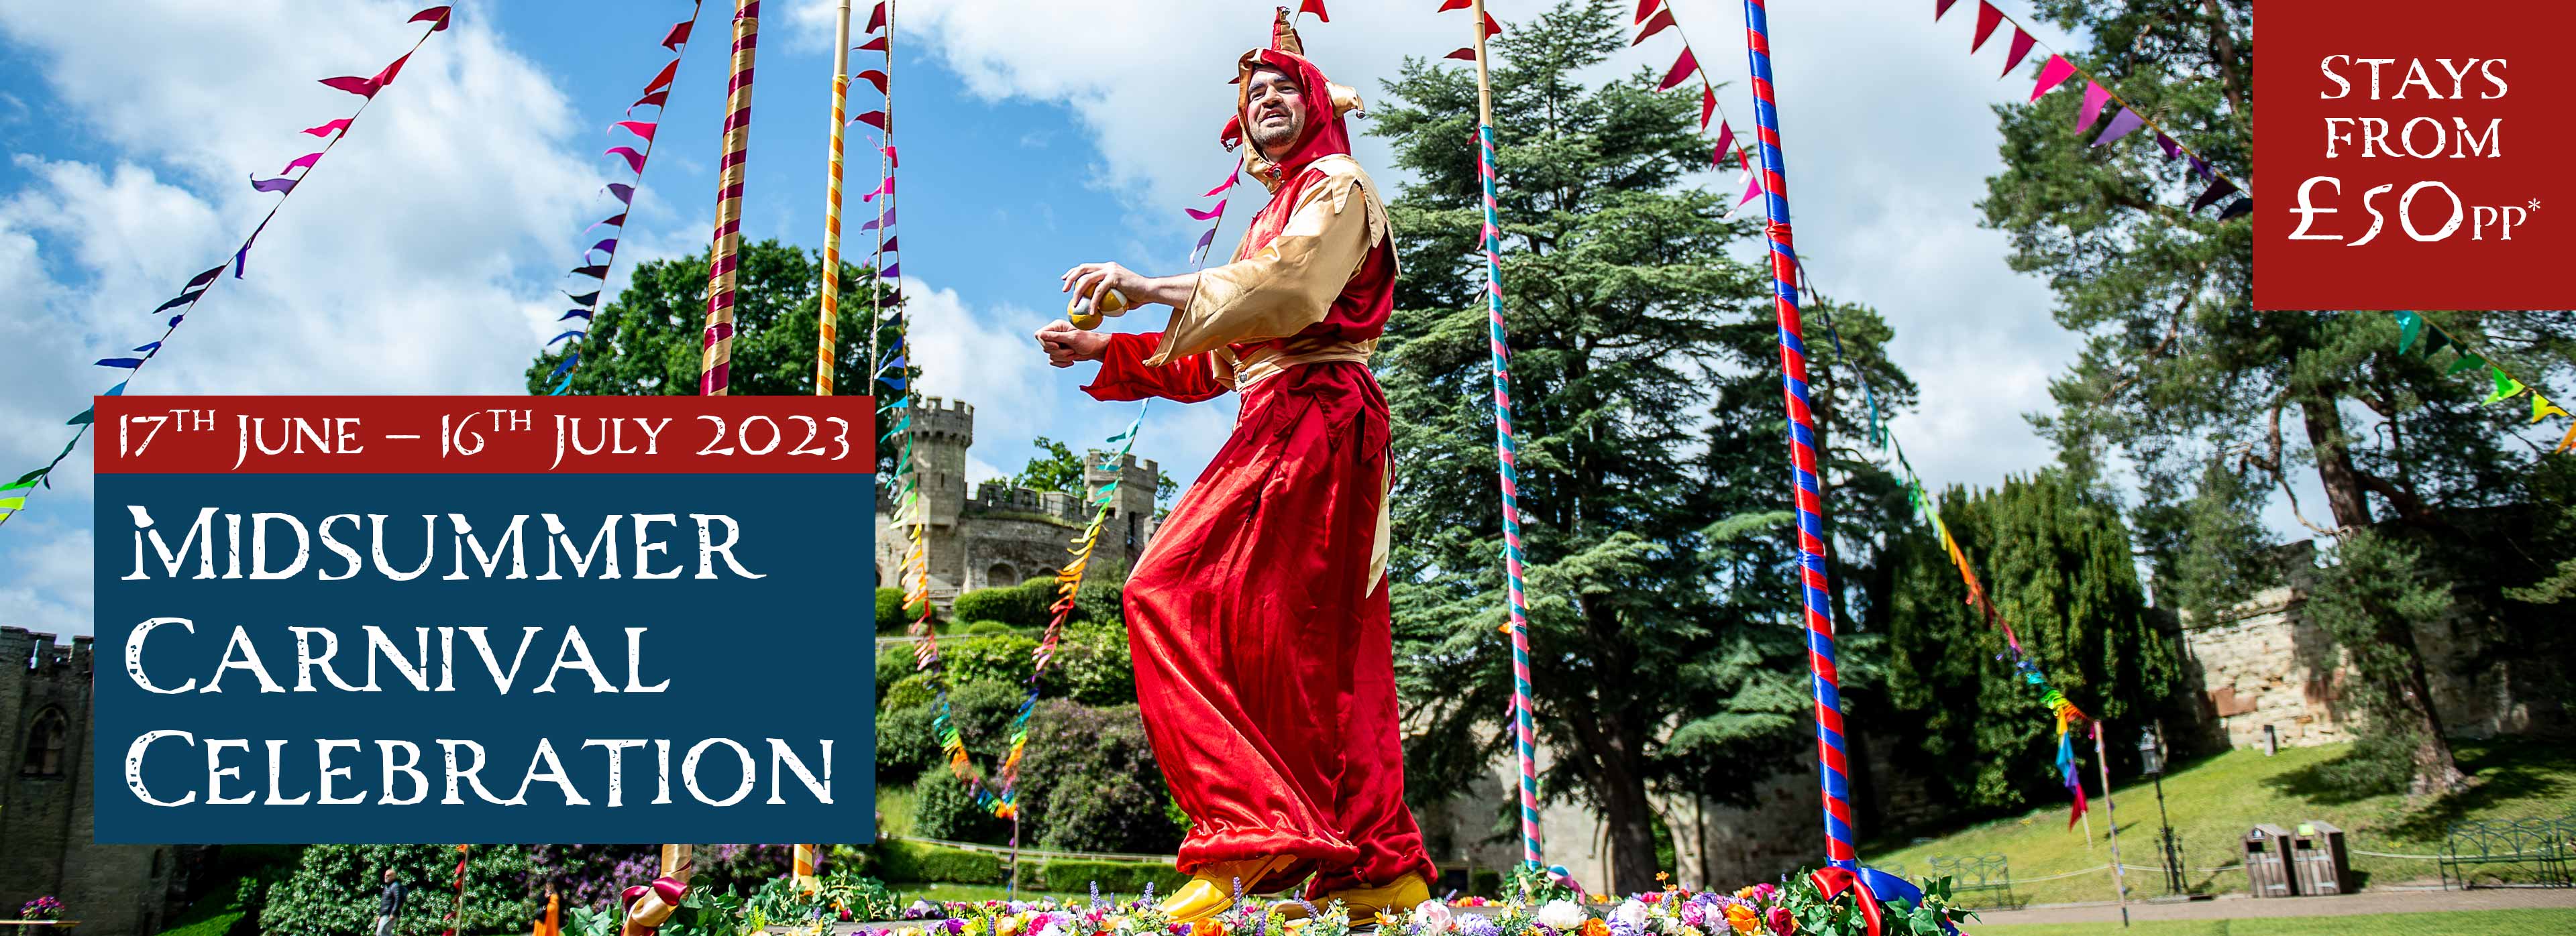  2023 Midsummer Carnival event at Warwick Castle